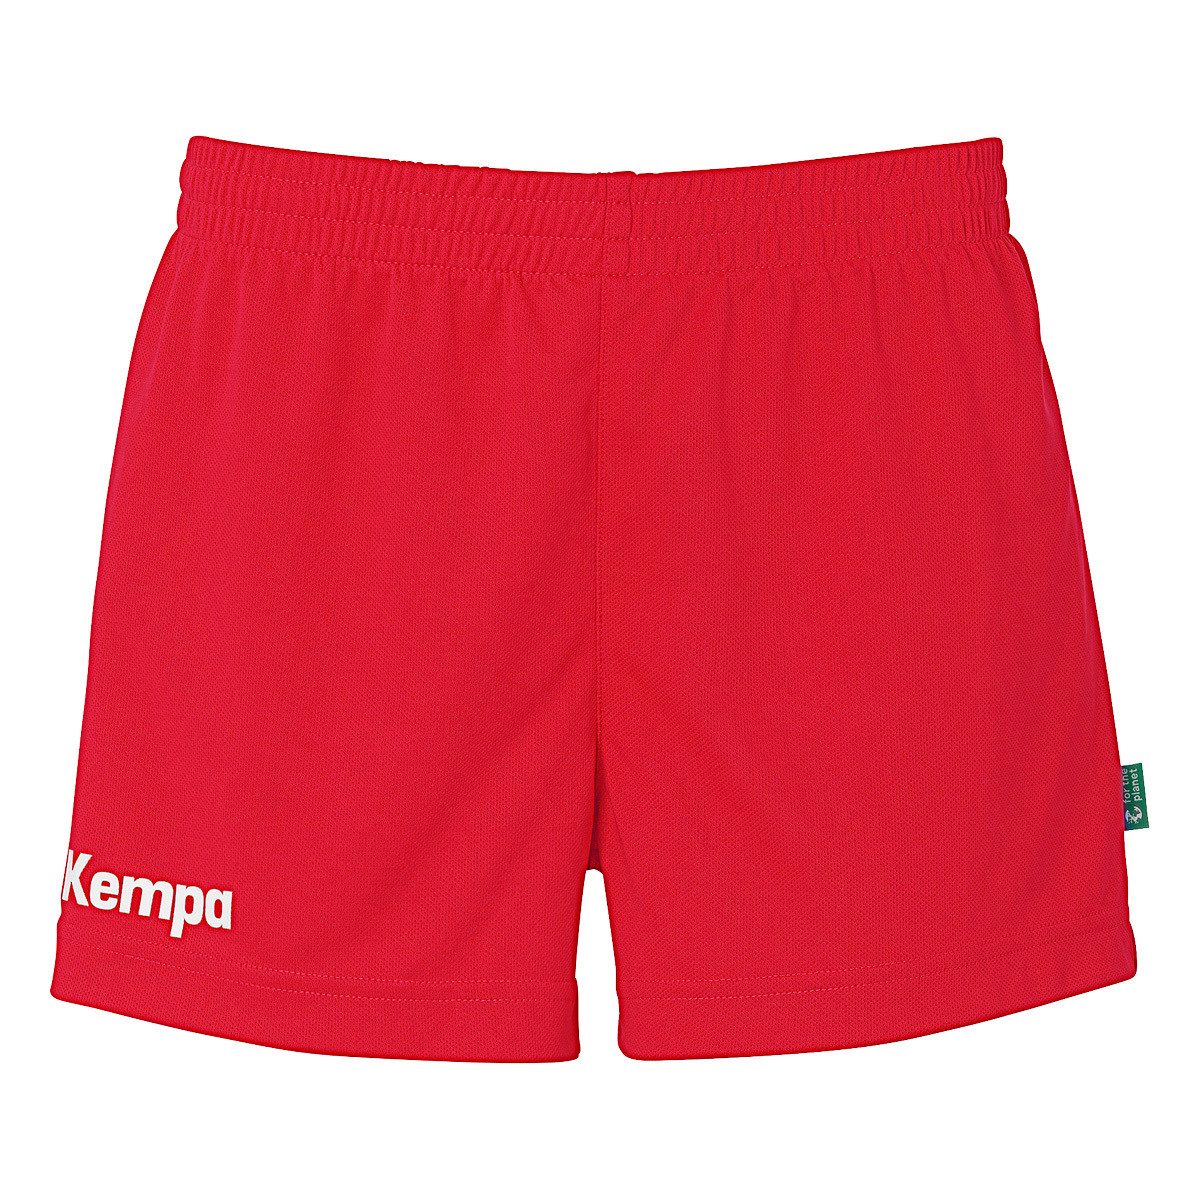 Kempa Shorts Shorts Team Women